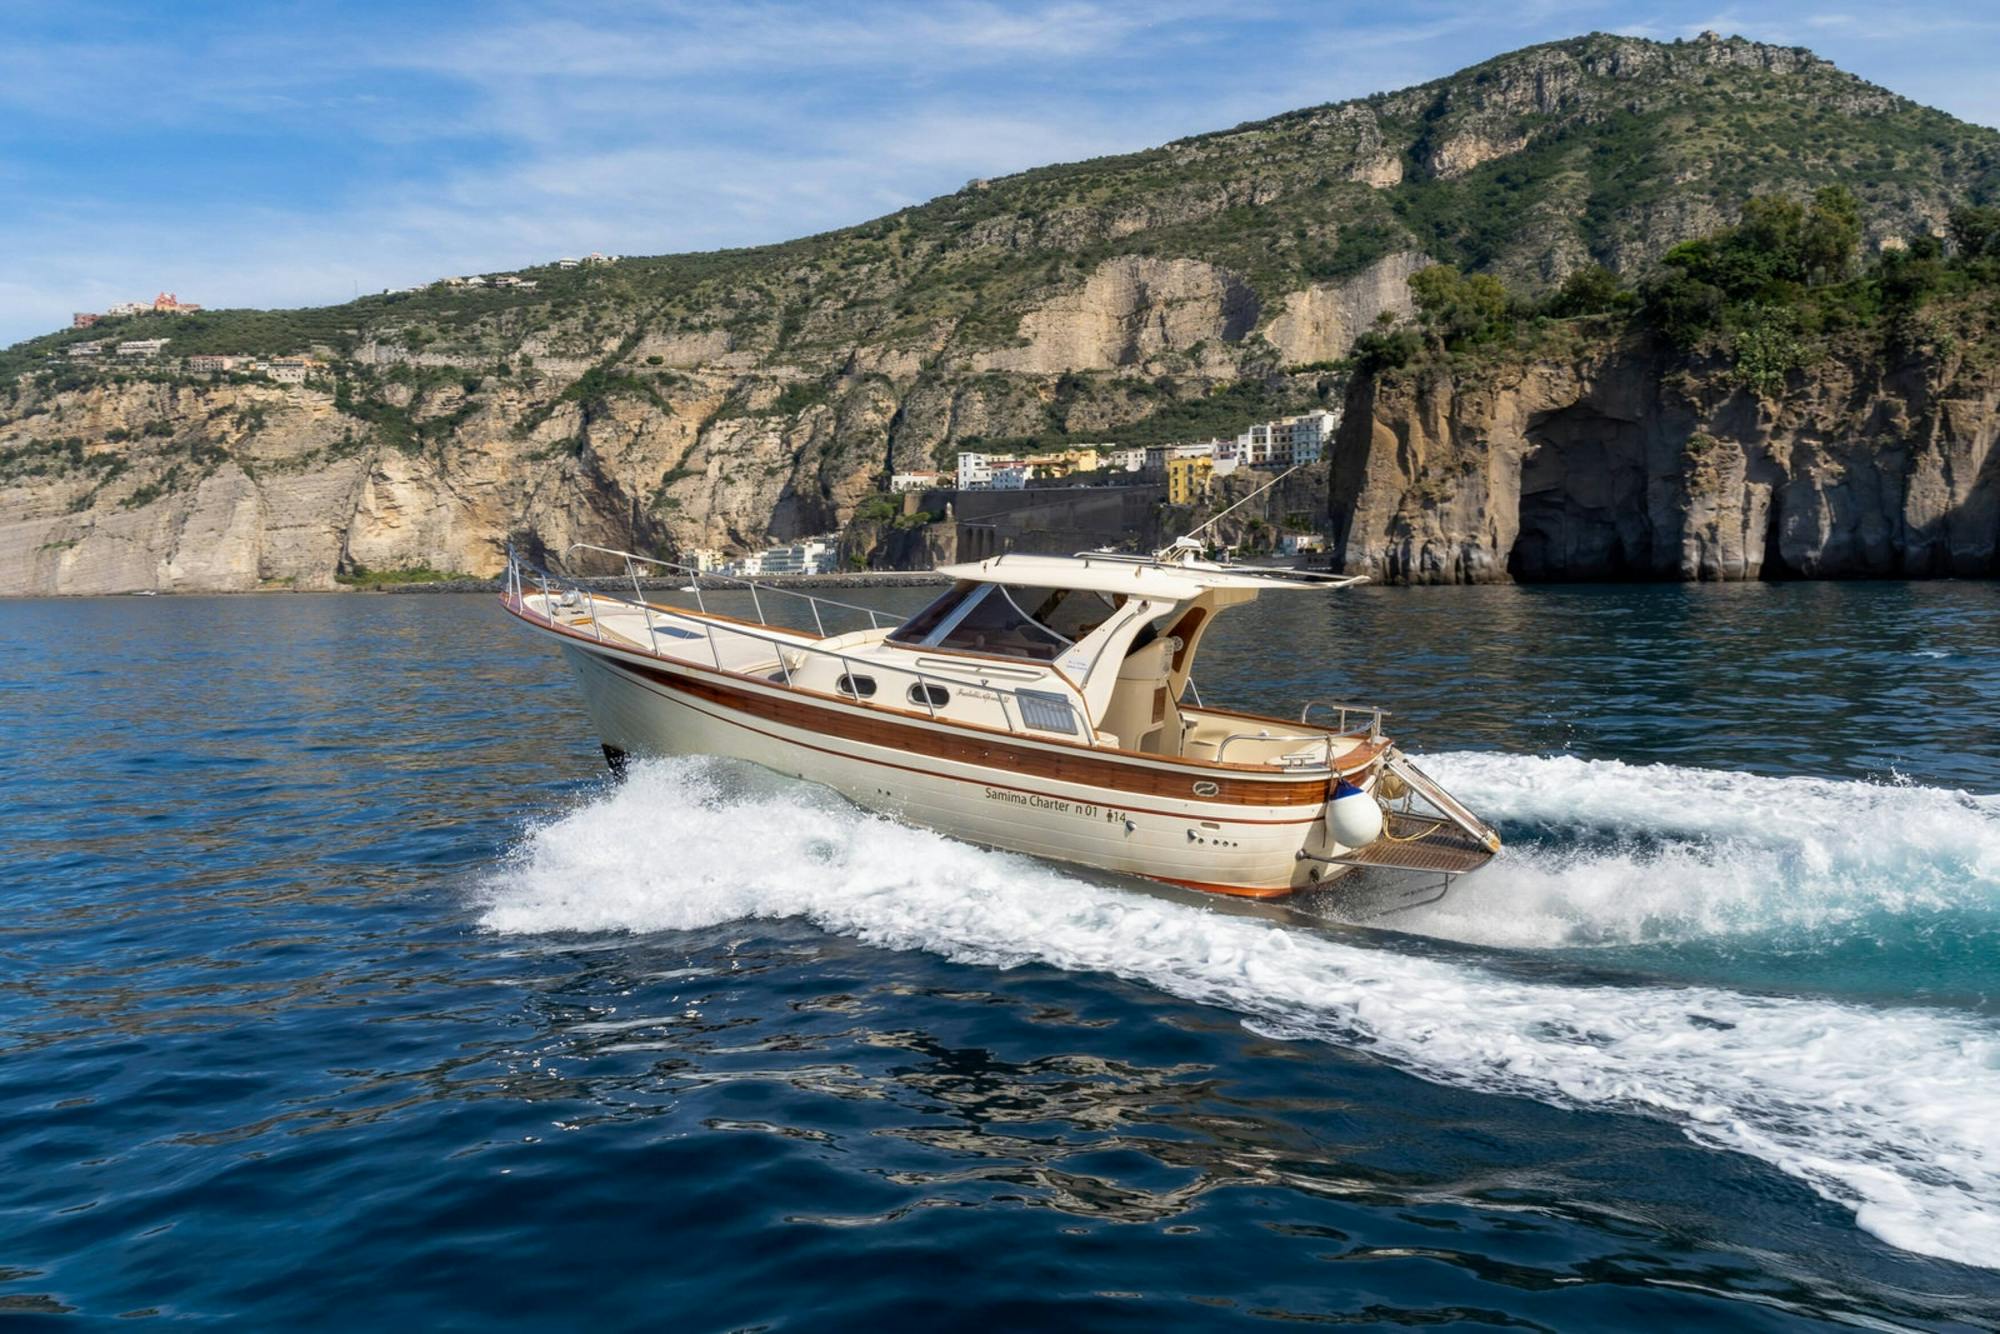 Positano & Amalfi Cruise from Sorrento